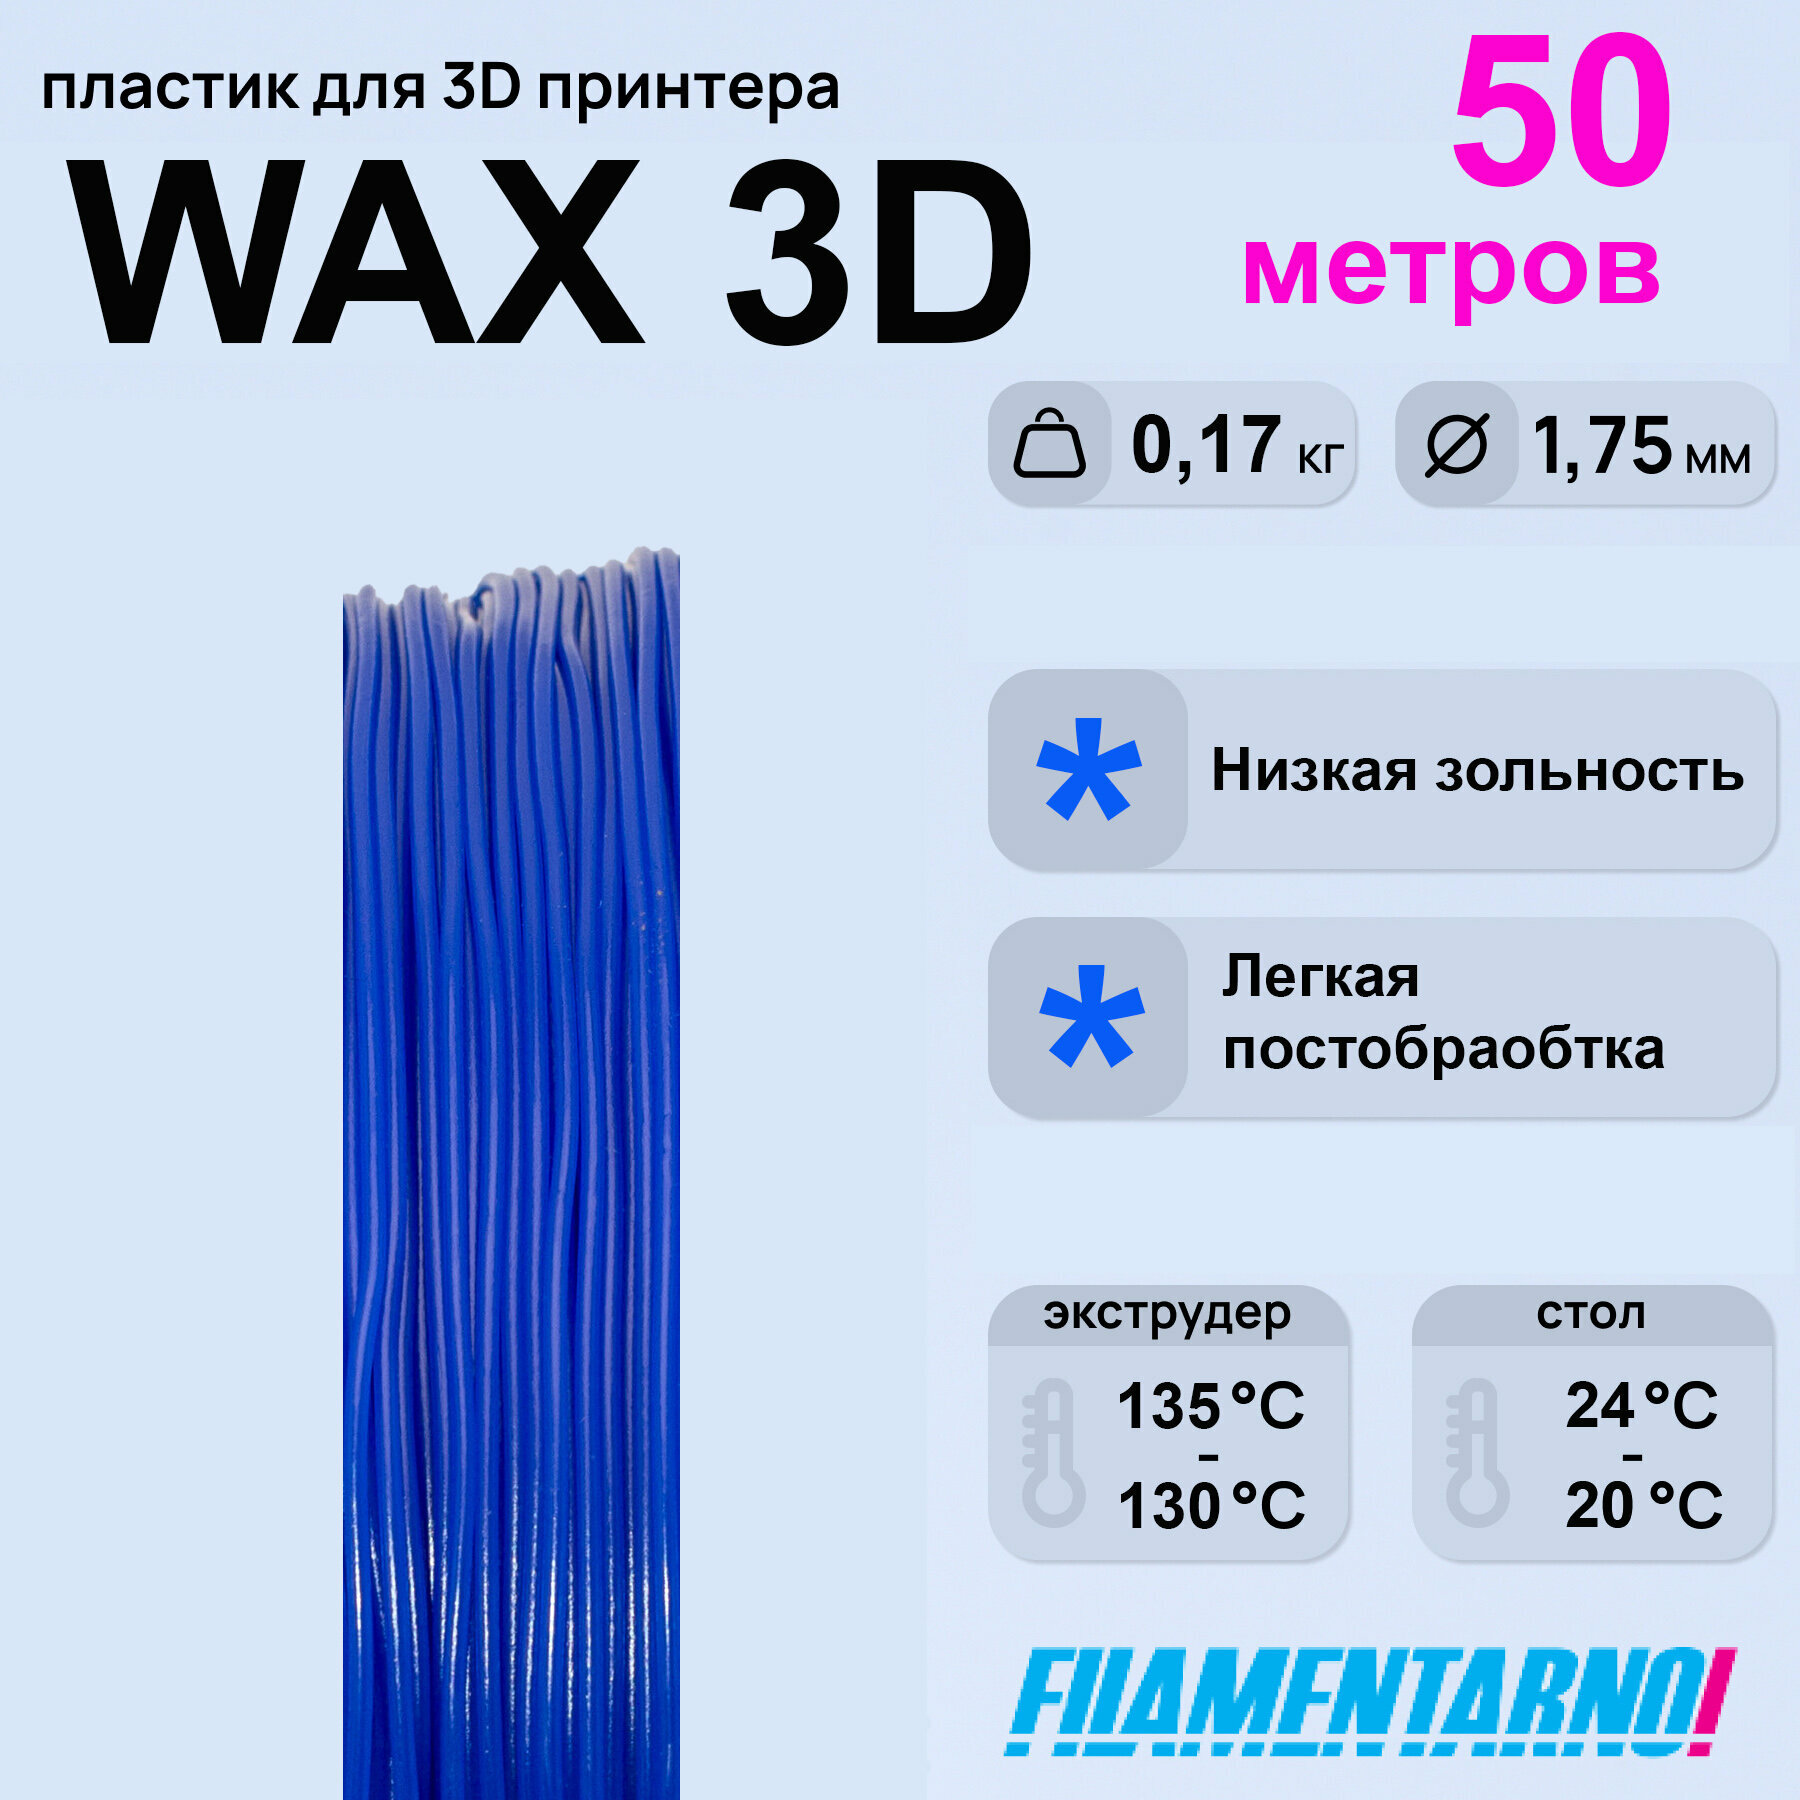 Воск WAX3D синий моток 50 м, 1,75 мм, пластик Filamentarno для 3D-принтера